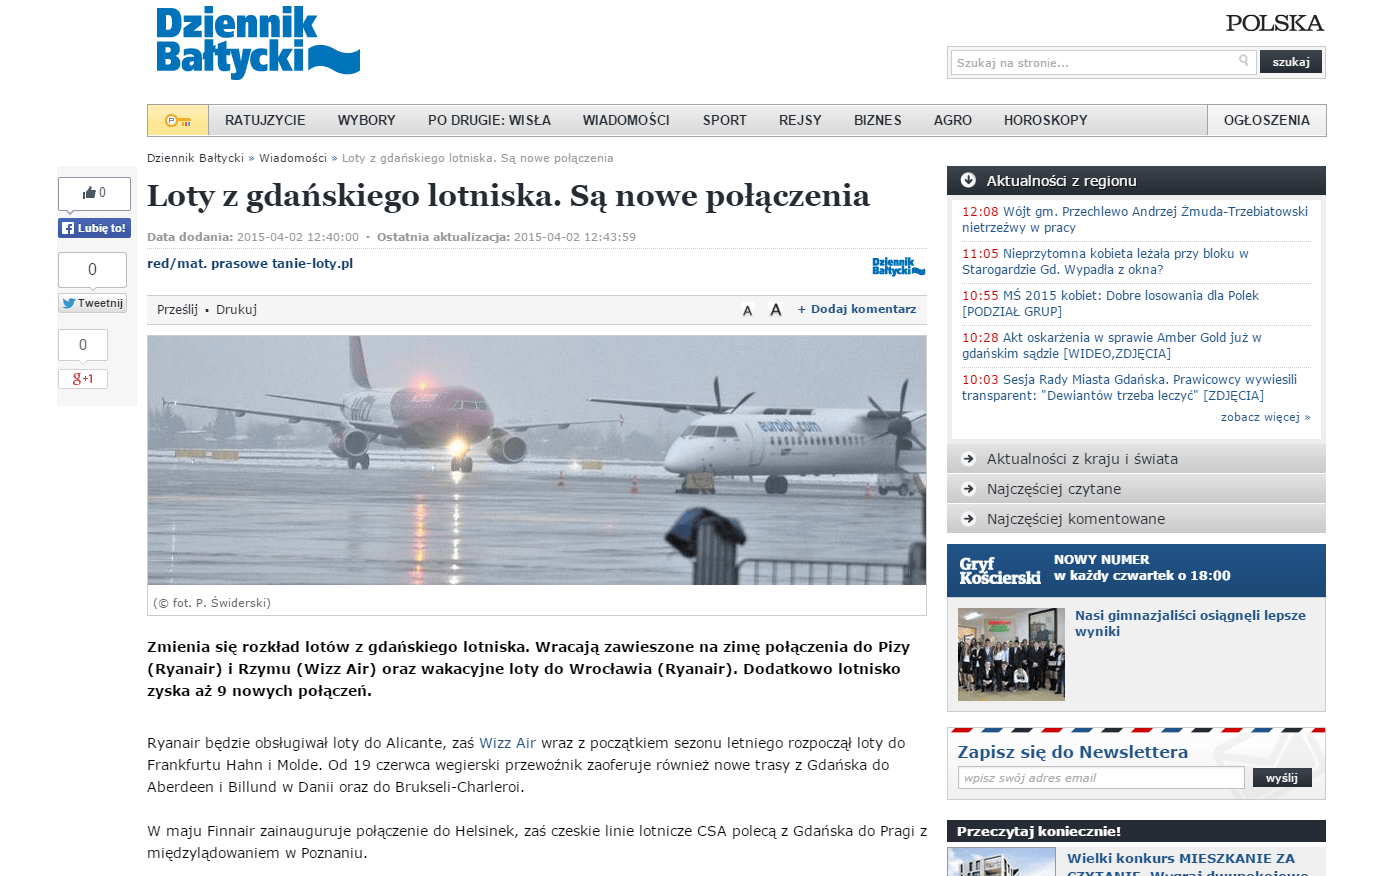 screenshot www.dziennikbaltycki.pl 2015 06 25 12 40 48